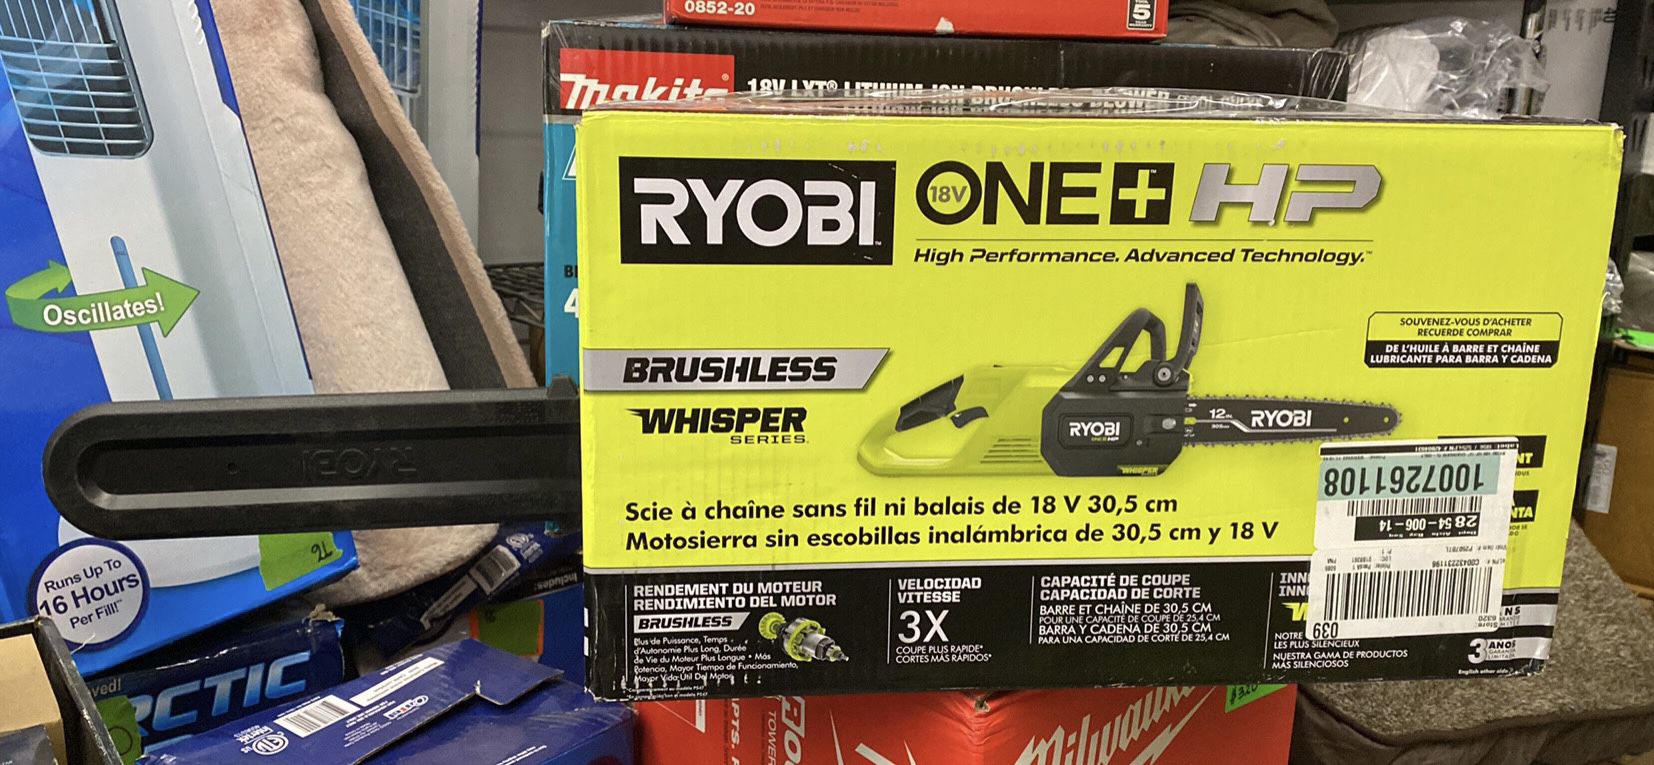 RYOBI ONE+ HP 18V Brushless Whisper Series 12 in. Battery Chainsaw (Tool Only) 